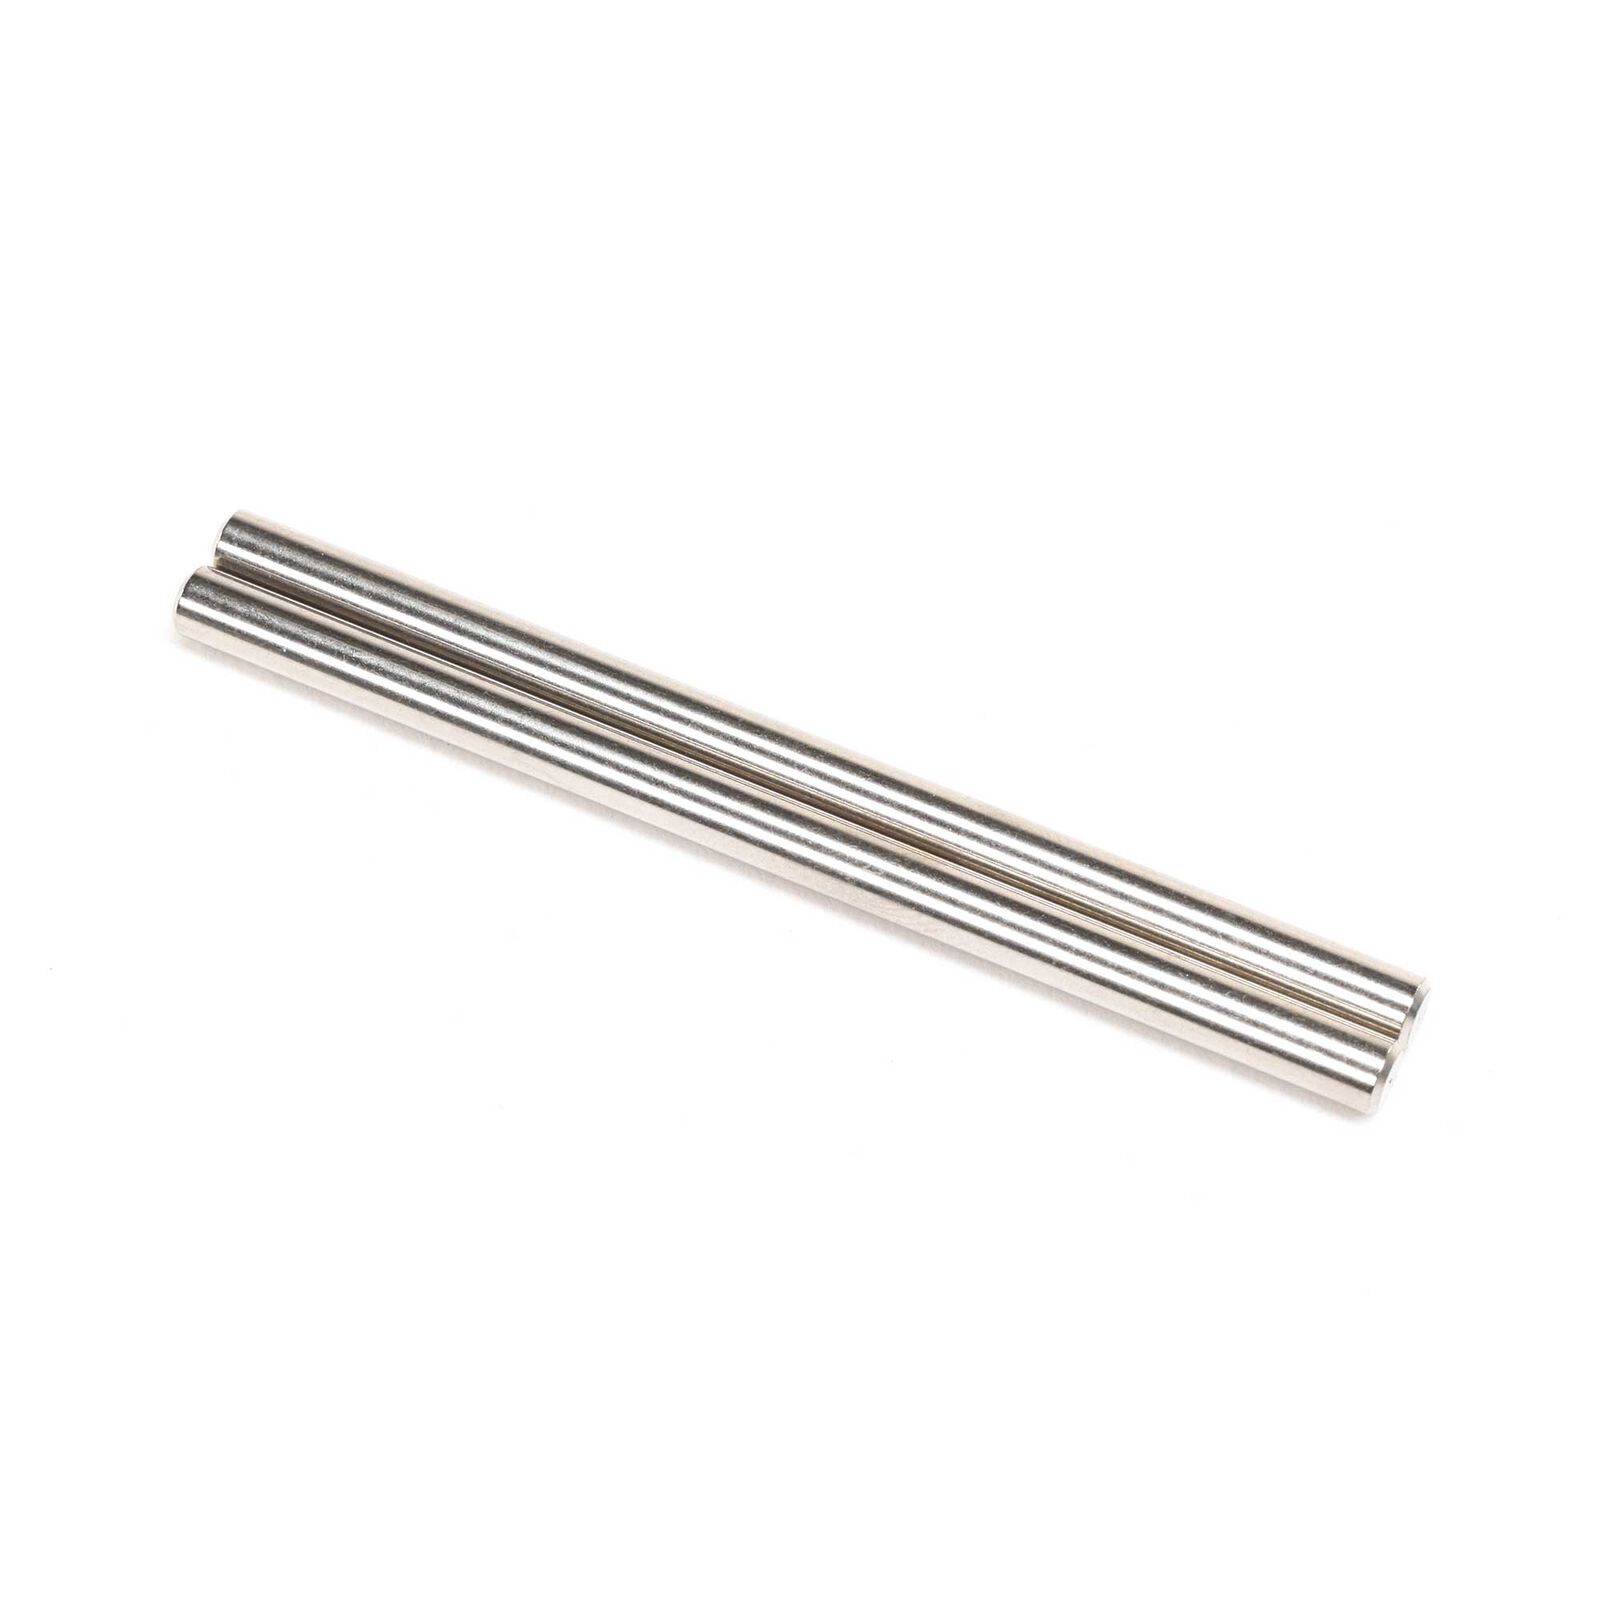 Hinge Pins, 4 x 68mm, Elec Nickel (2): 8X, 8XE 2.0